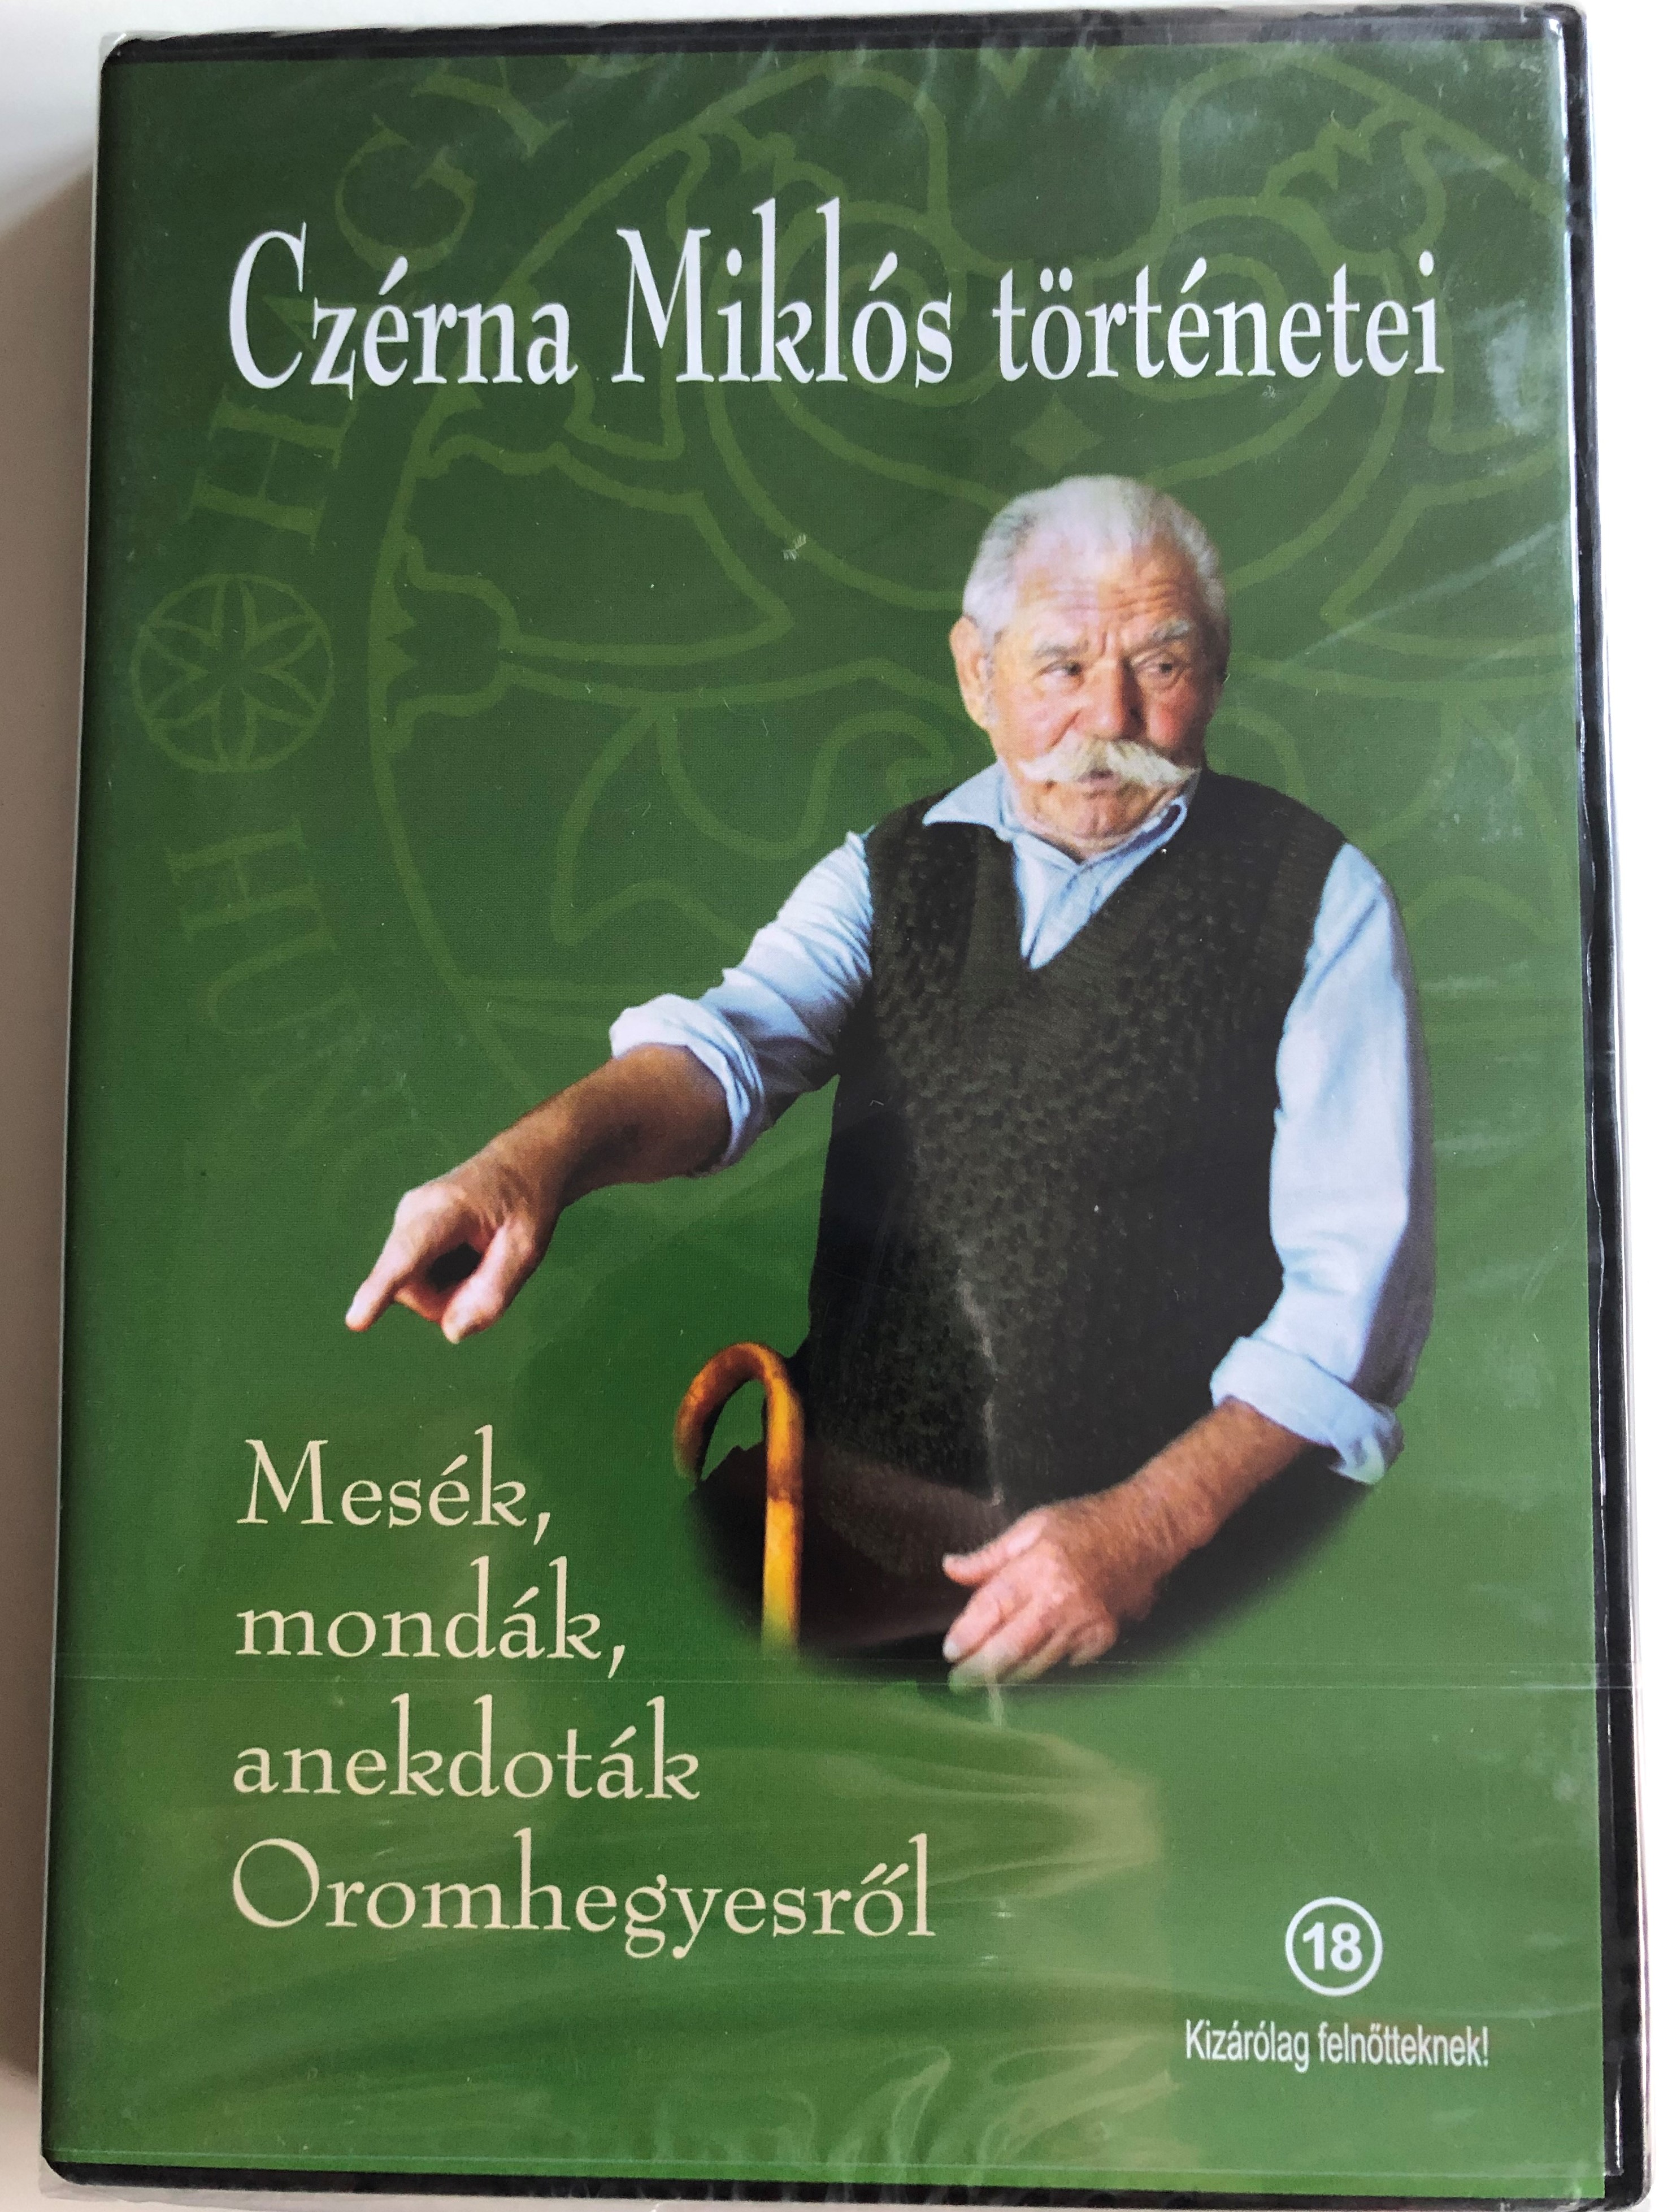 Czerna Miklos tortenetei DVD 2006 Mesek mondak anekdotak 1.JPG